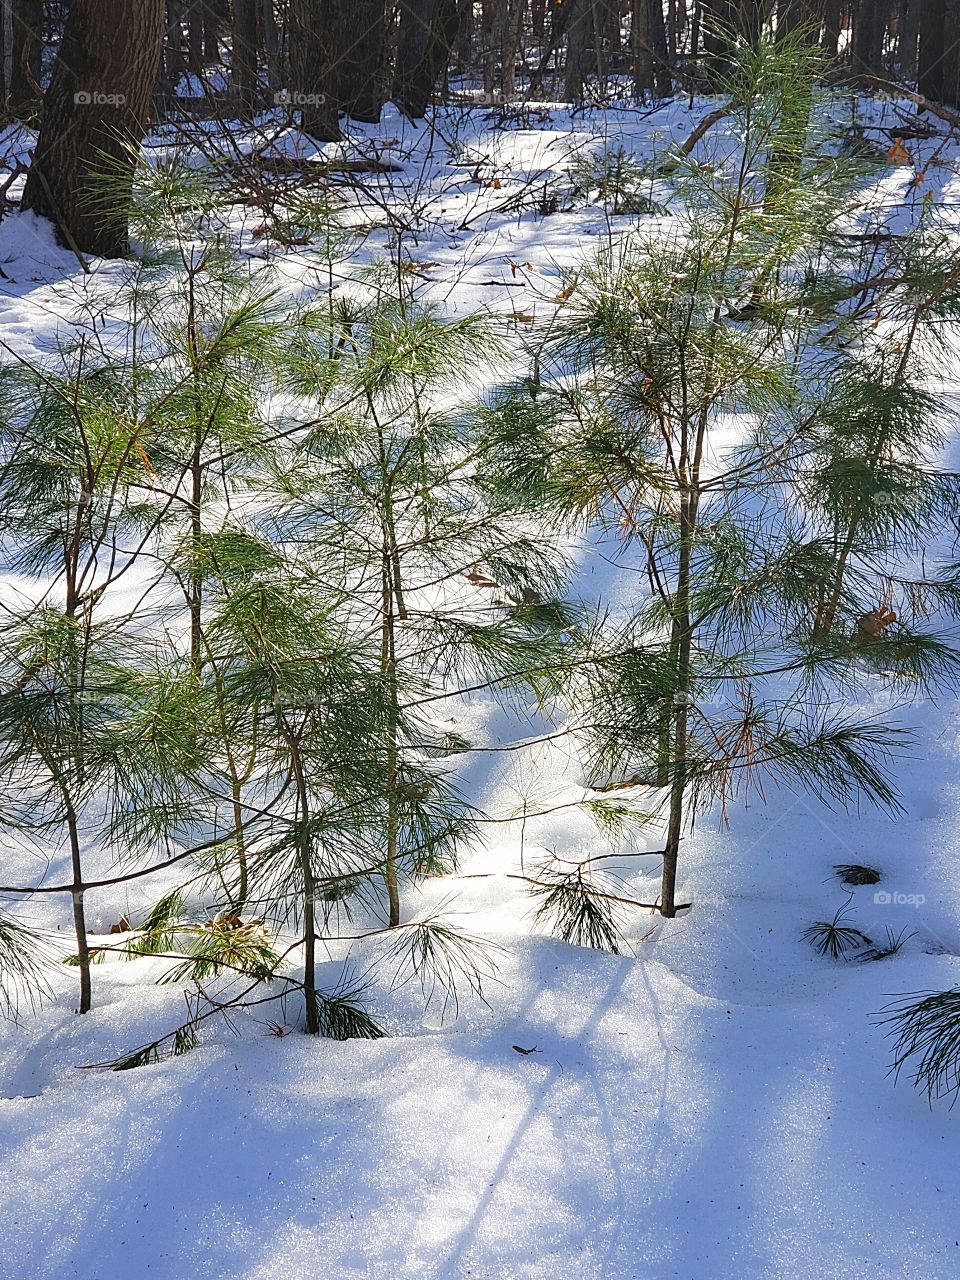 tiny pine trees in the snow